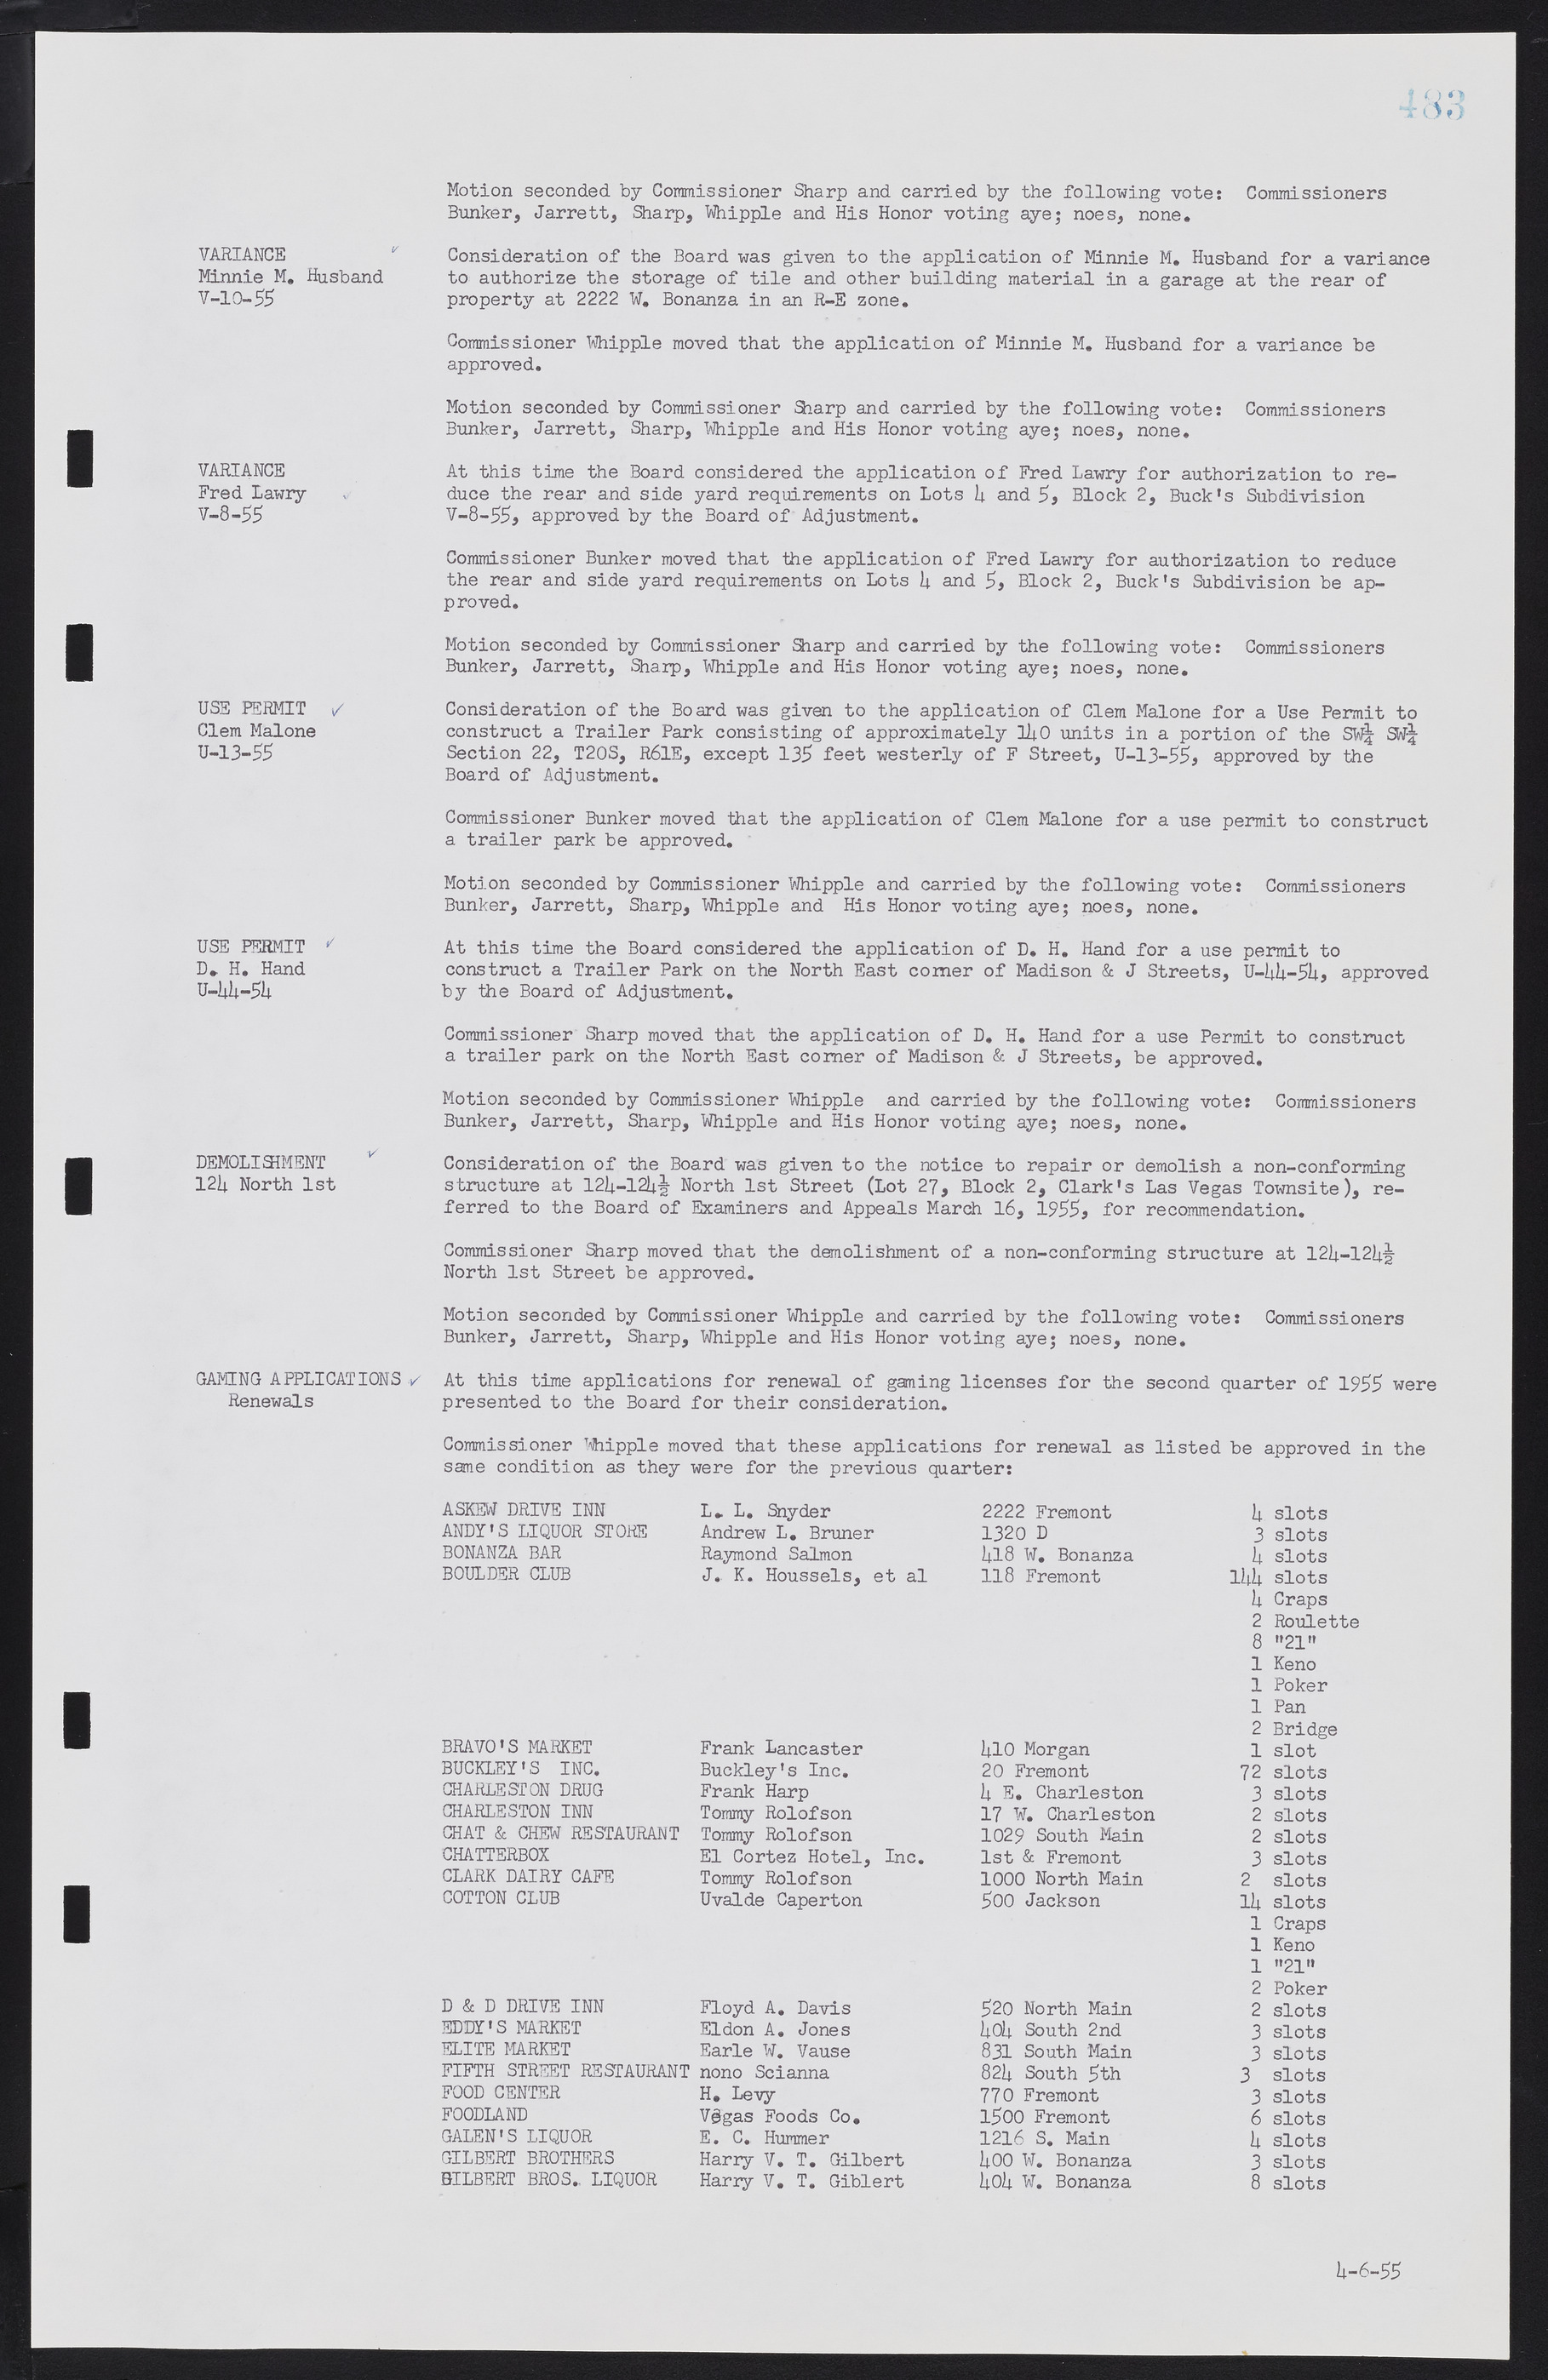 Las Vegas City Commission Minutes, February 17, 1954 to September 21, 1955, lvc000009-489